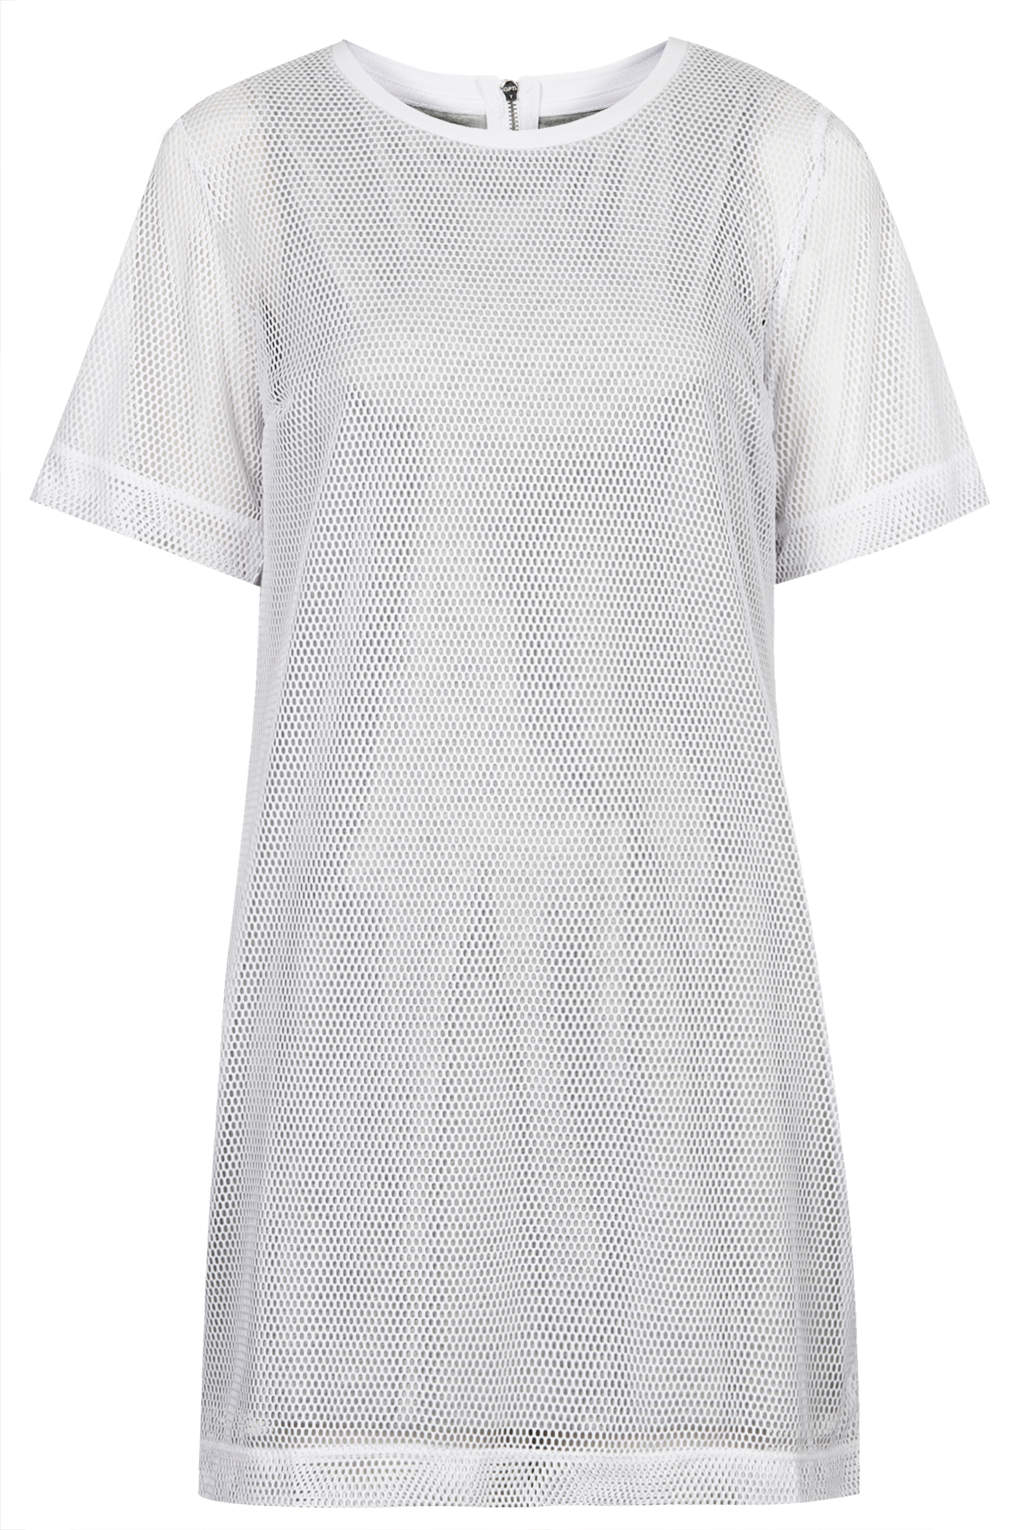 Lyst - Topshop Mesh Overlay Tshirt Dress in White